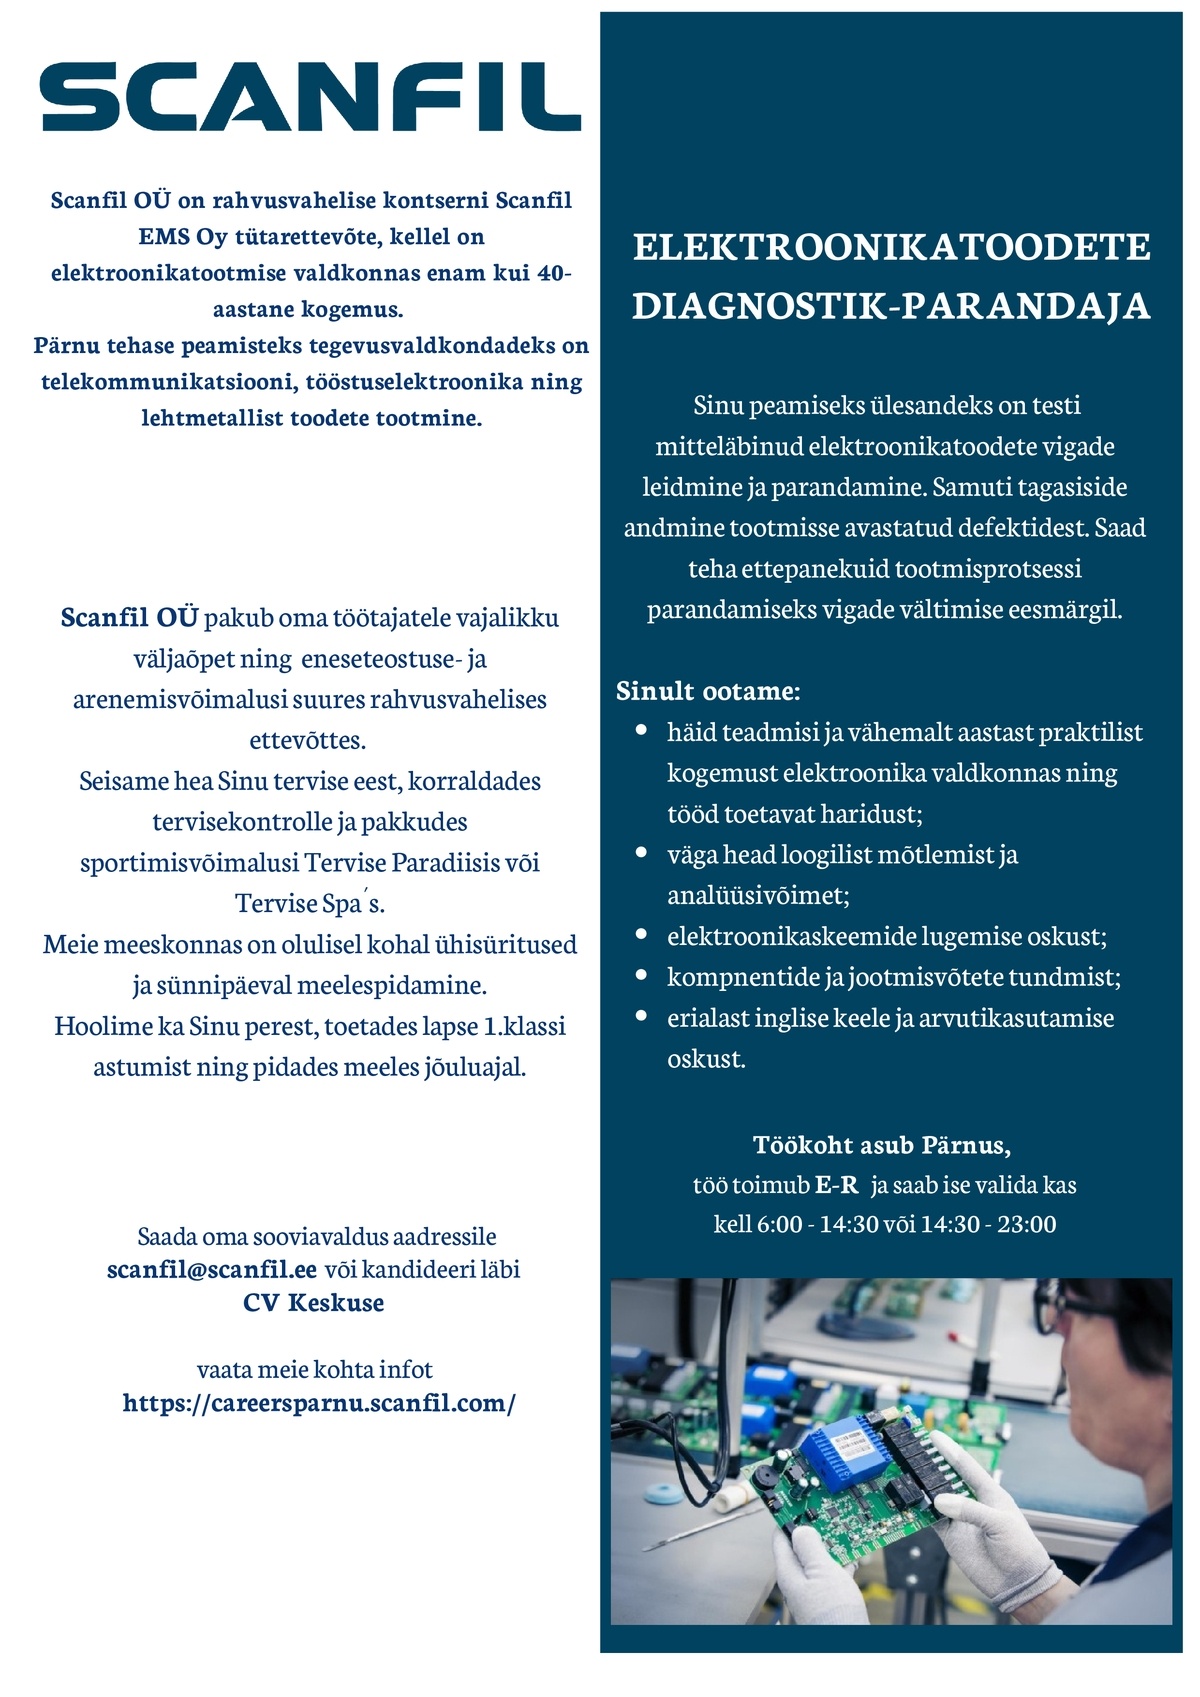 Scanfil OÜ Elektroonikatoodete diagnostik-parandaja